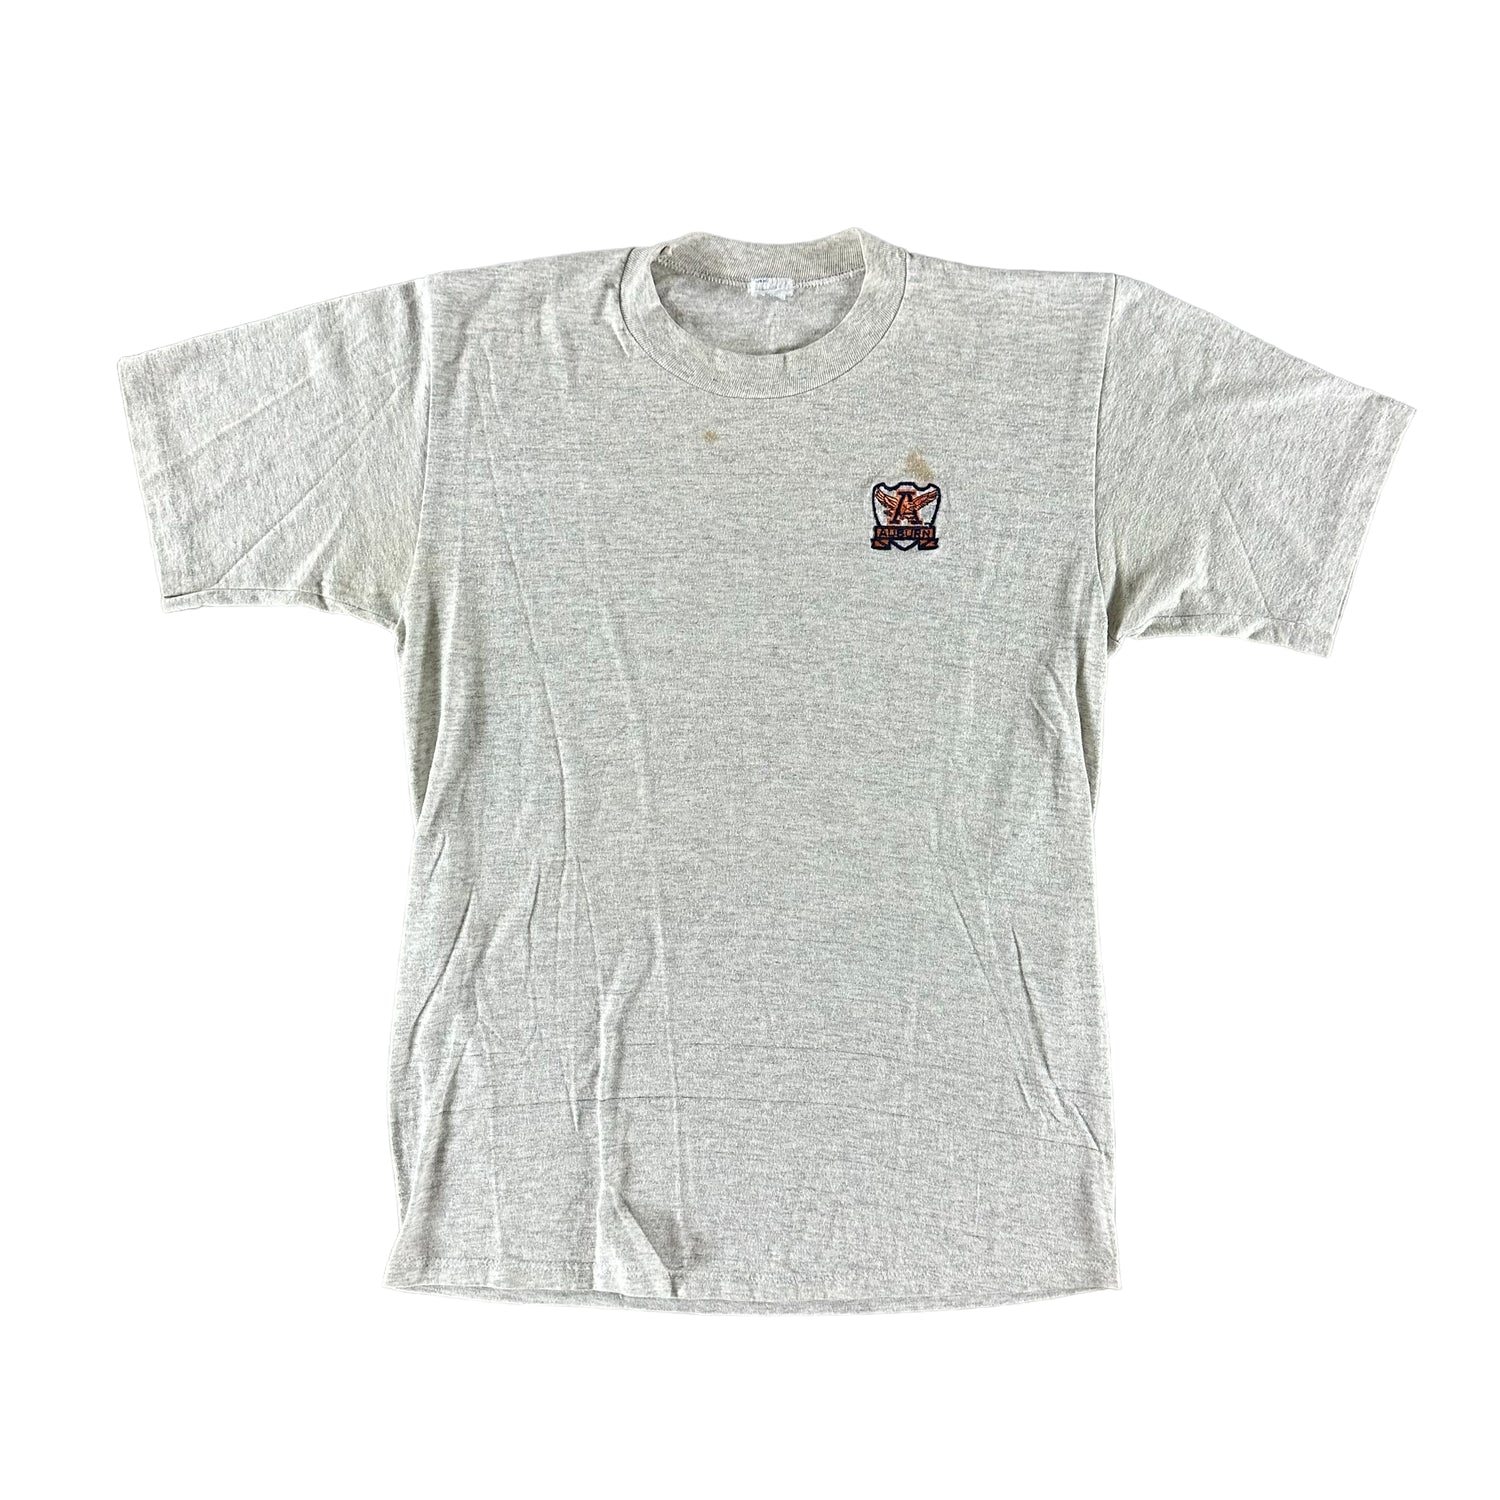 Vintage 1990s Auburn University T-shirt size Large